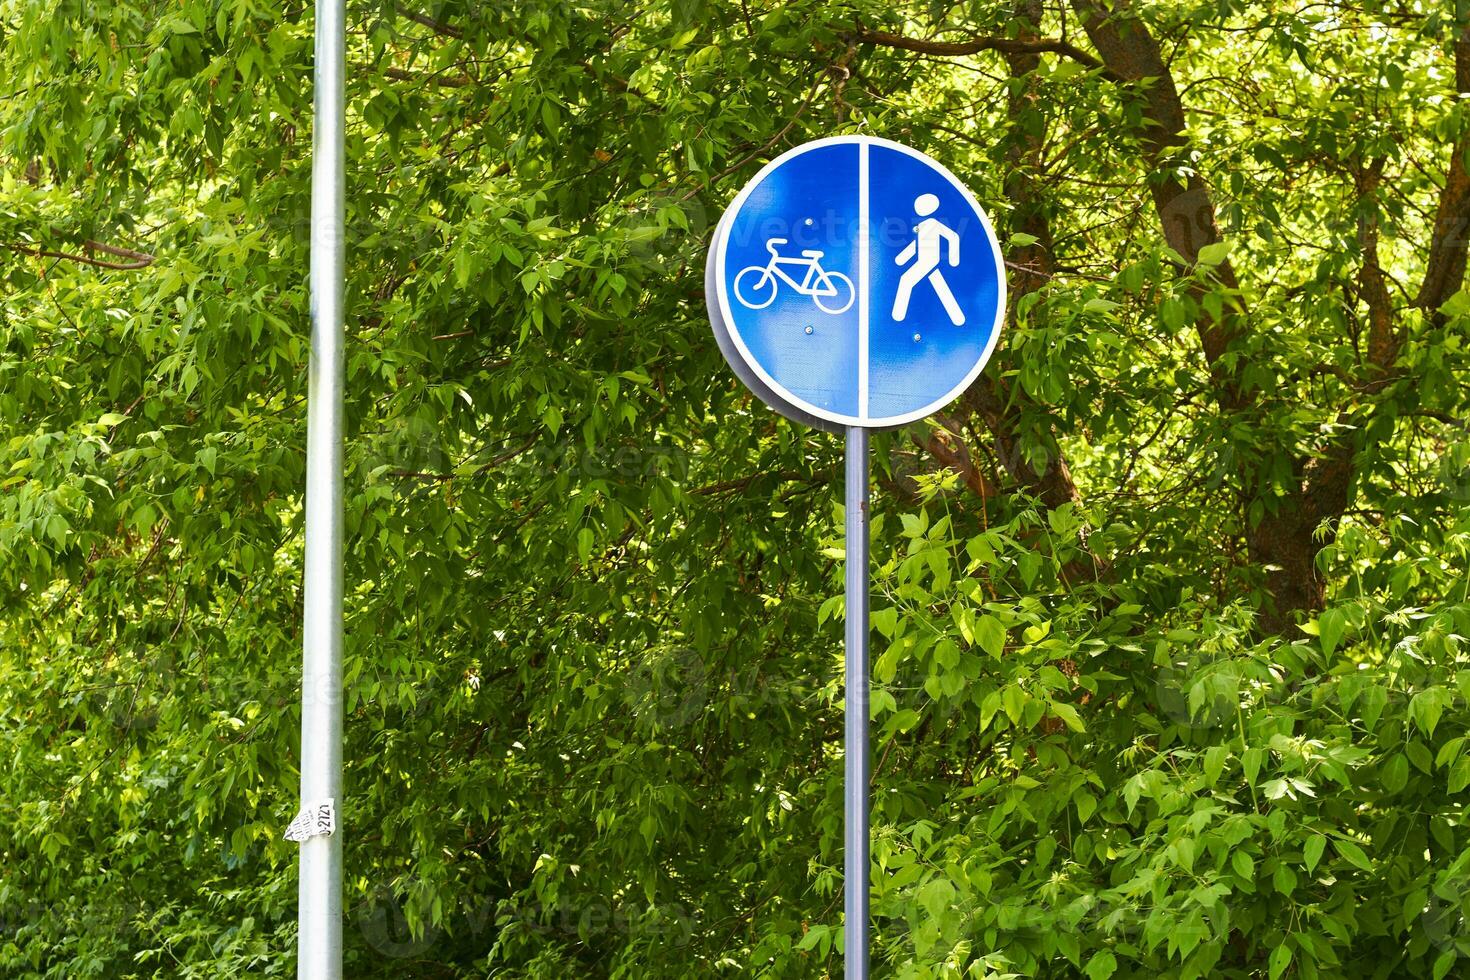 foto redondo azul peatonal y bicicleta firmar